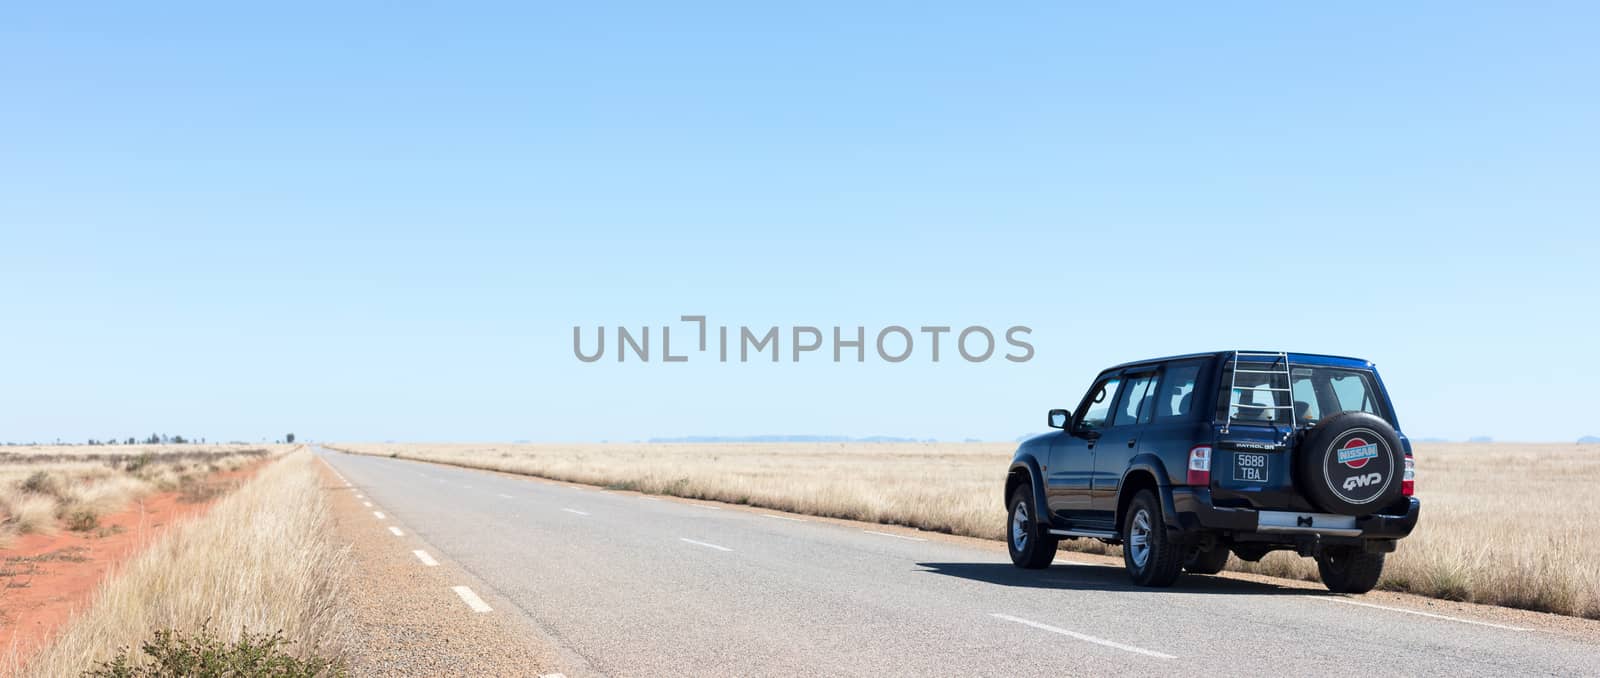 Madagascar on july 30, 2019 - A black car on a deserted road on Madagascar.